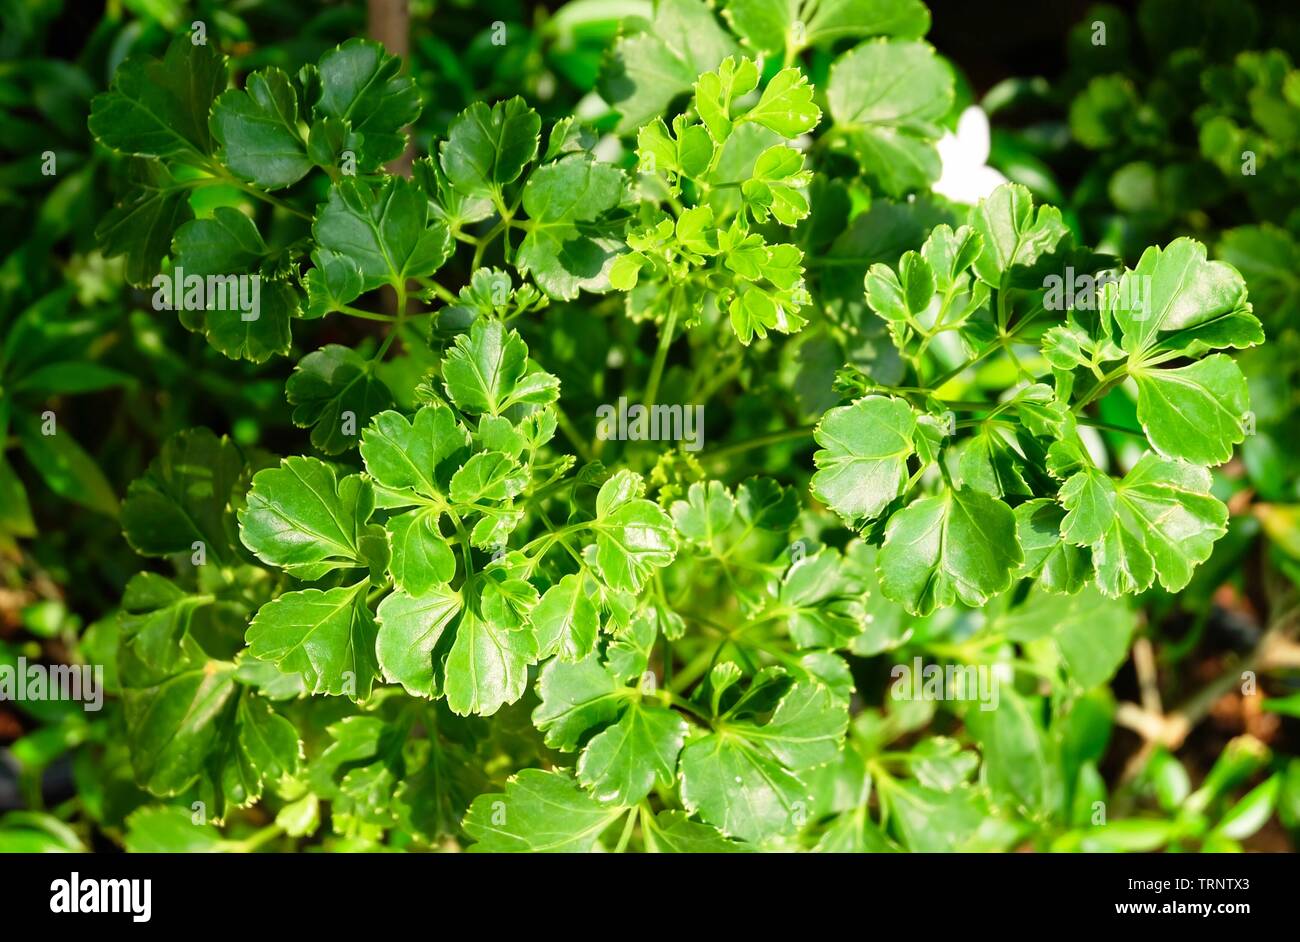 Ecological Concept, Beautiful Green and White Polyscias or Geranium Aralia Plants. Stock Photo